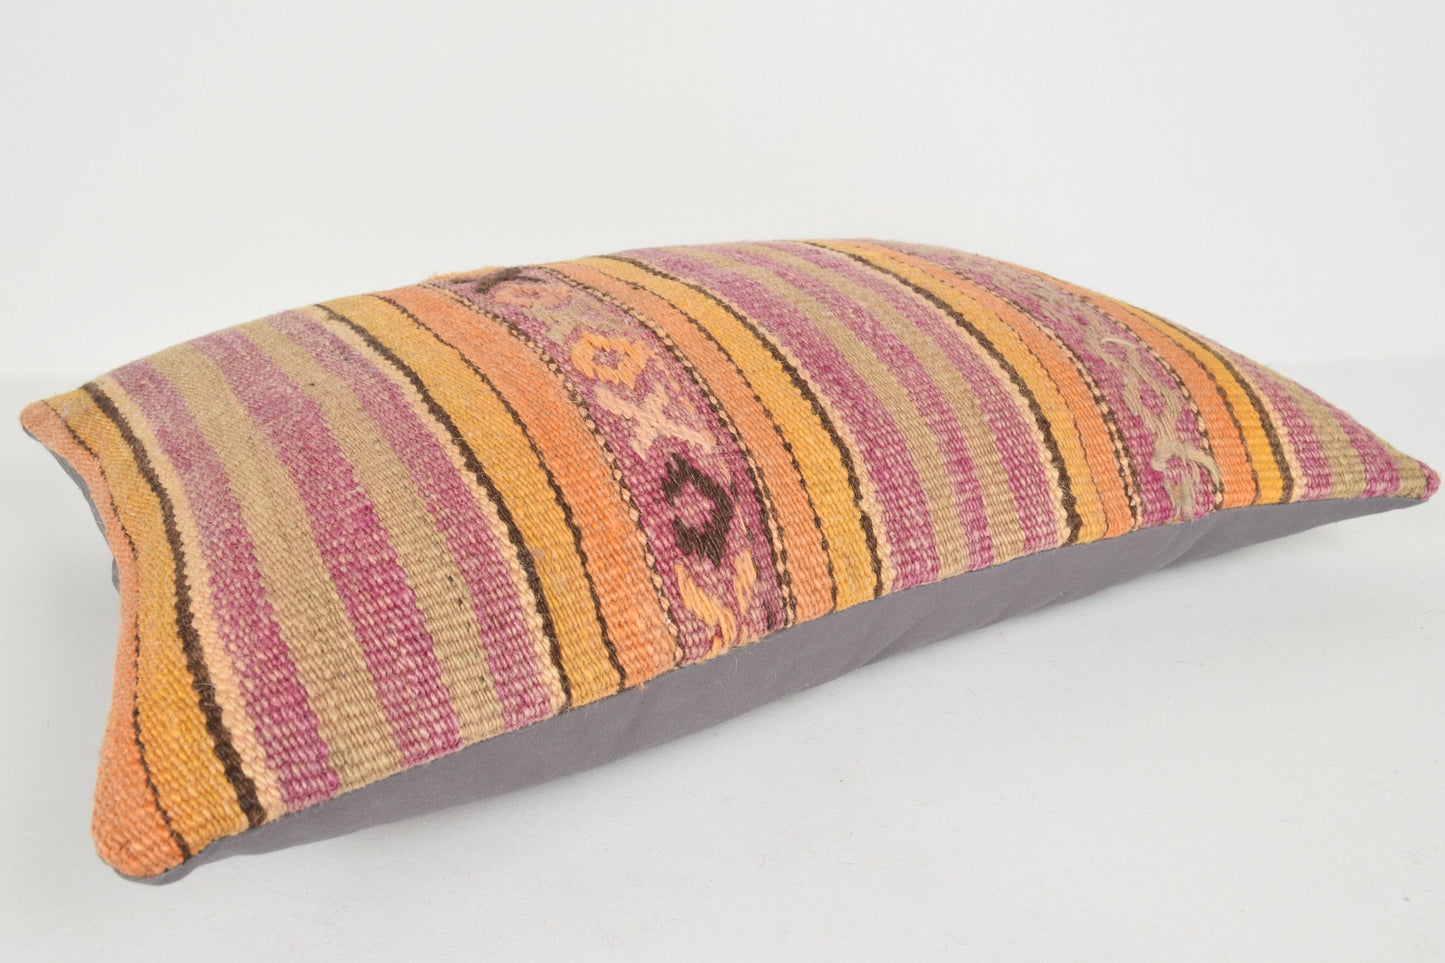 Turkish Style Floor Cushions E00608 Lumbar Folk art Southwestern Bedding